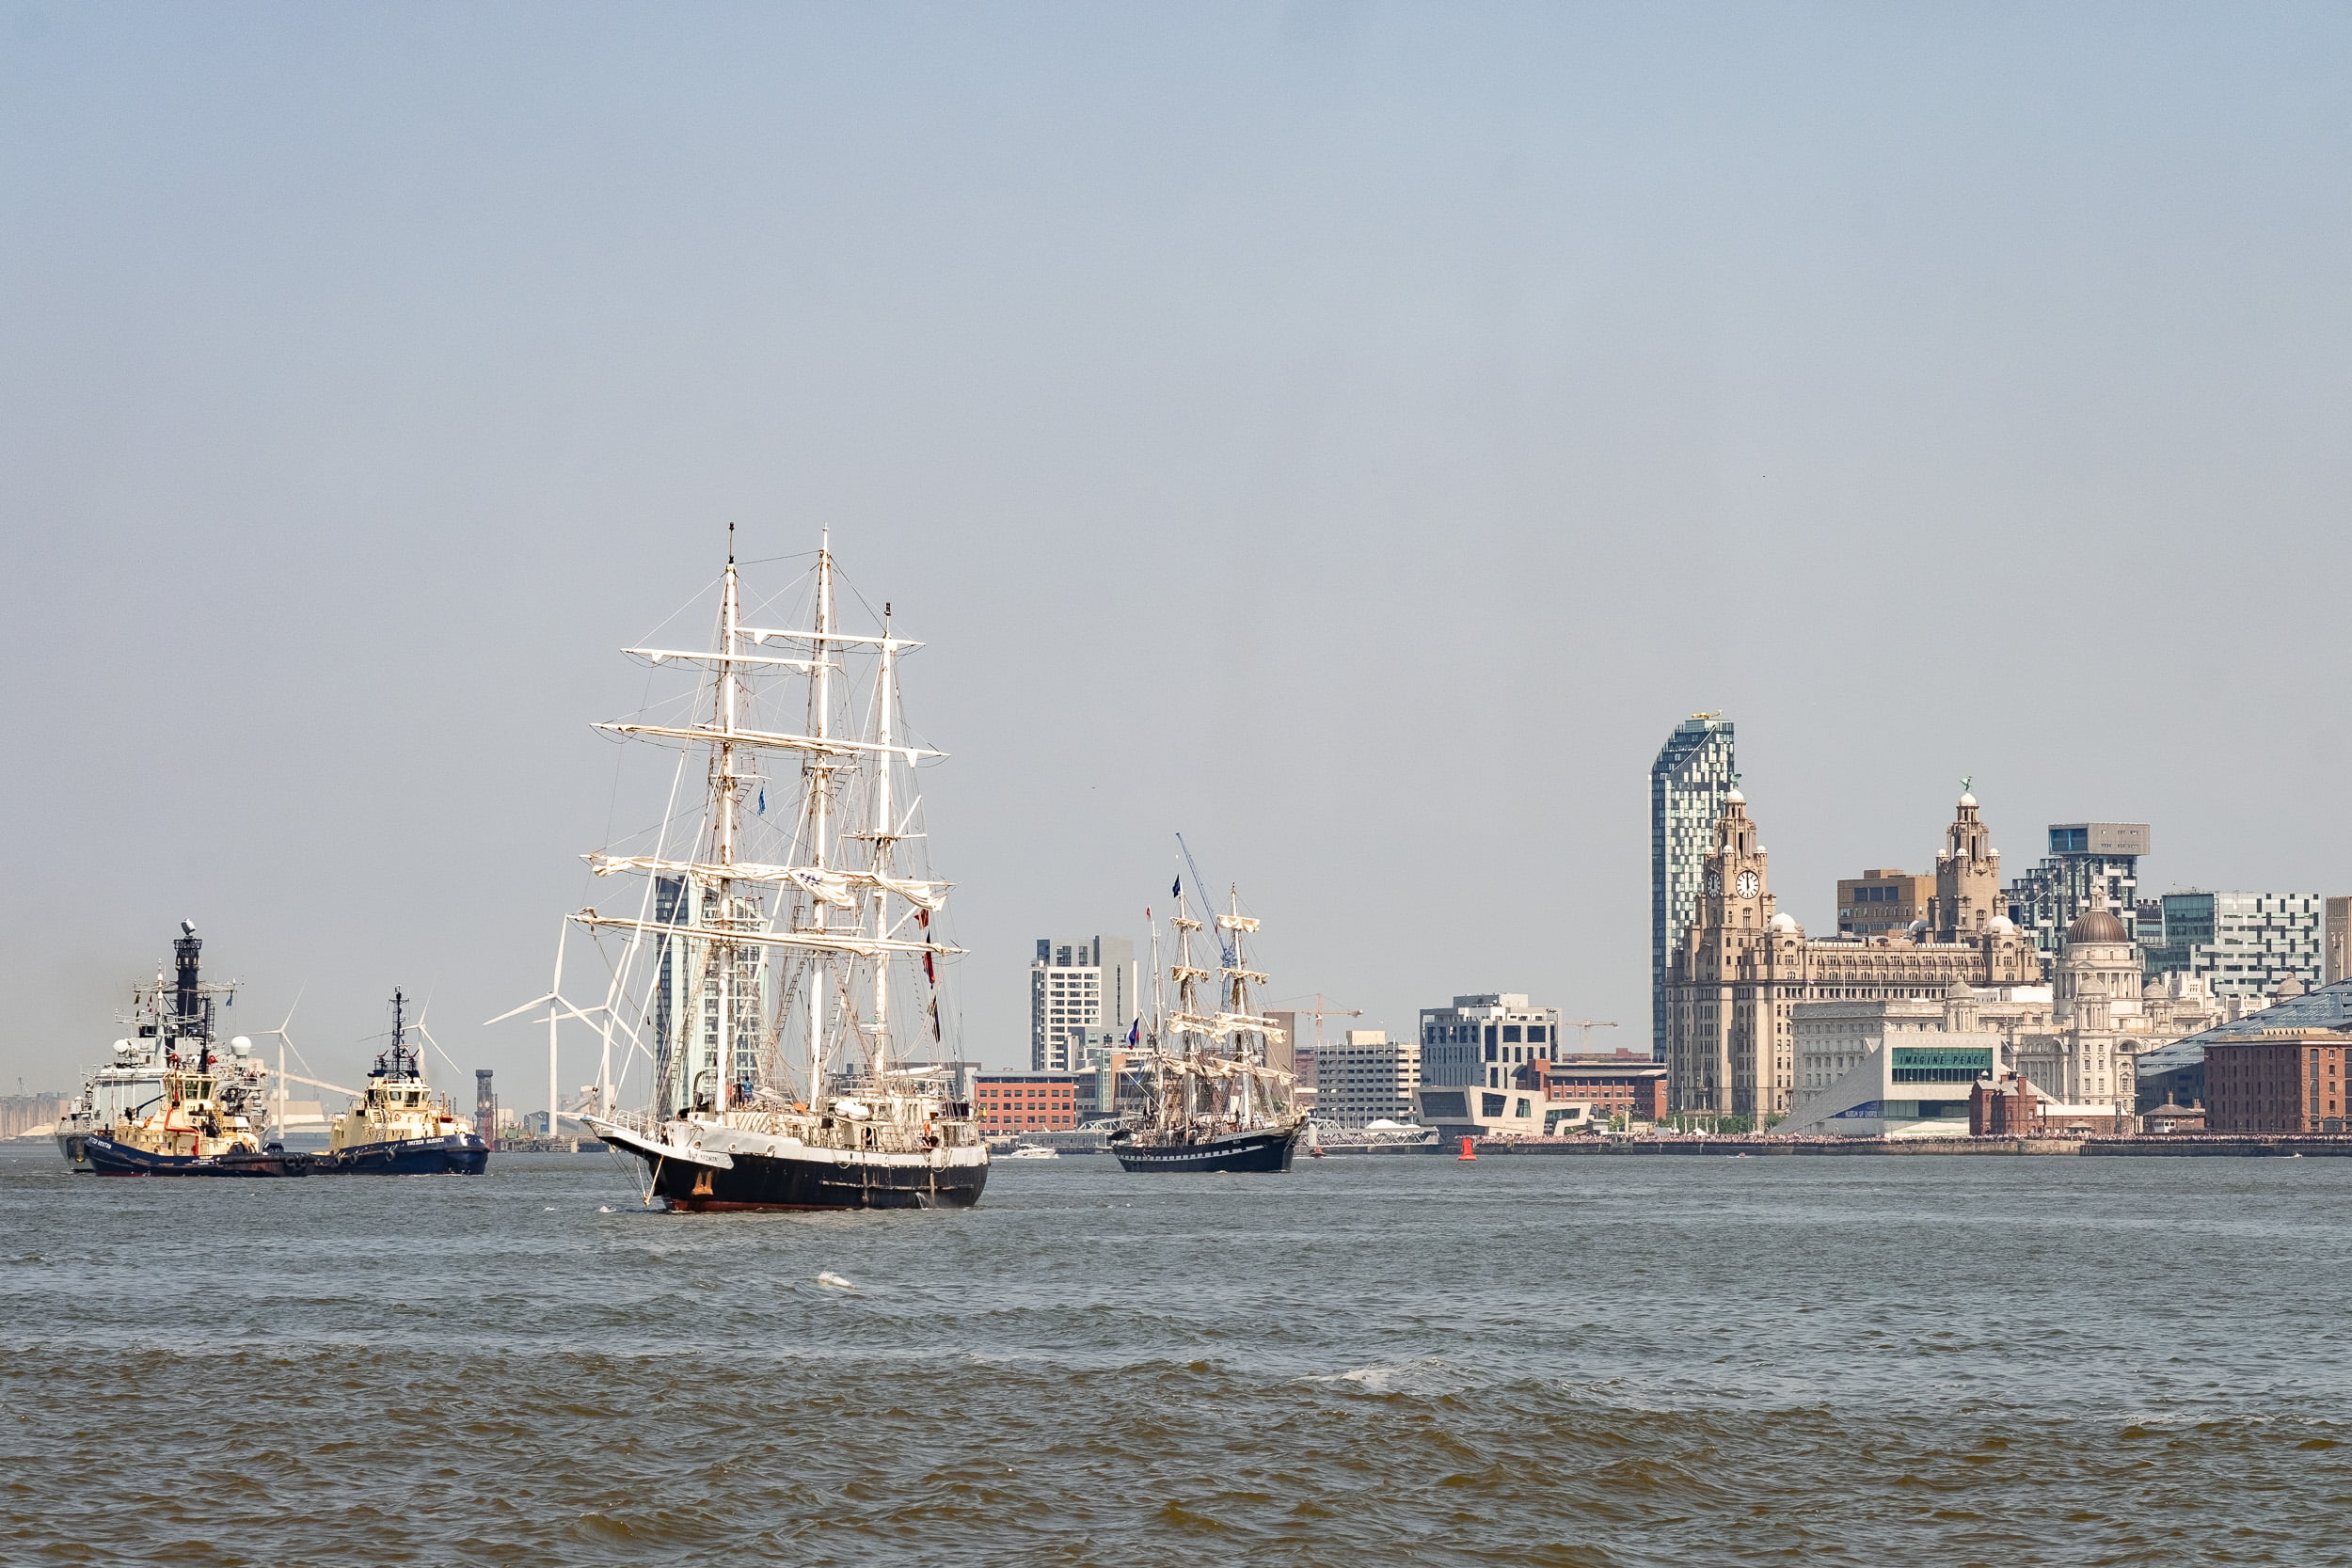 Liverpool Tall Ships